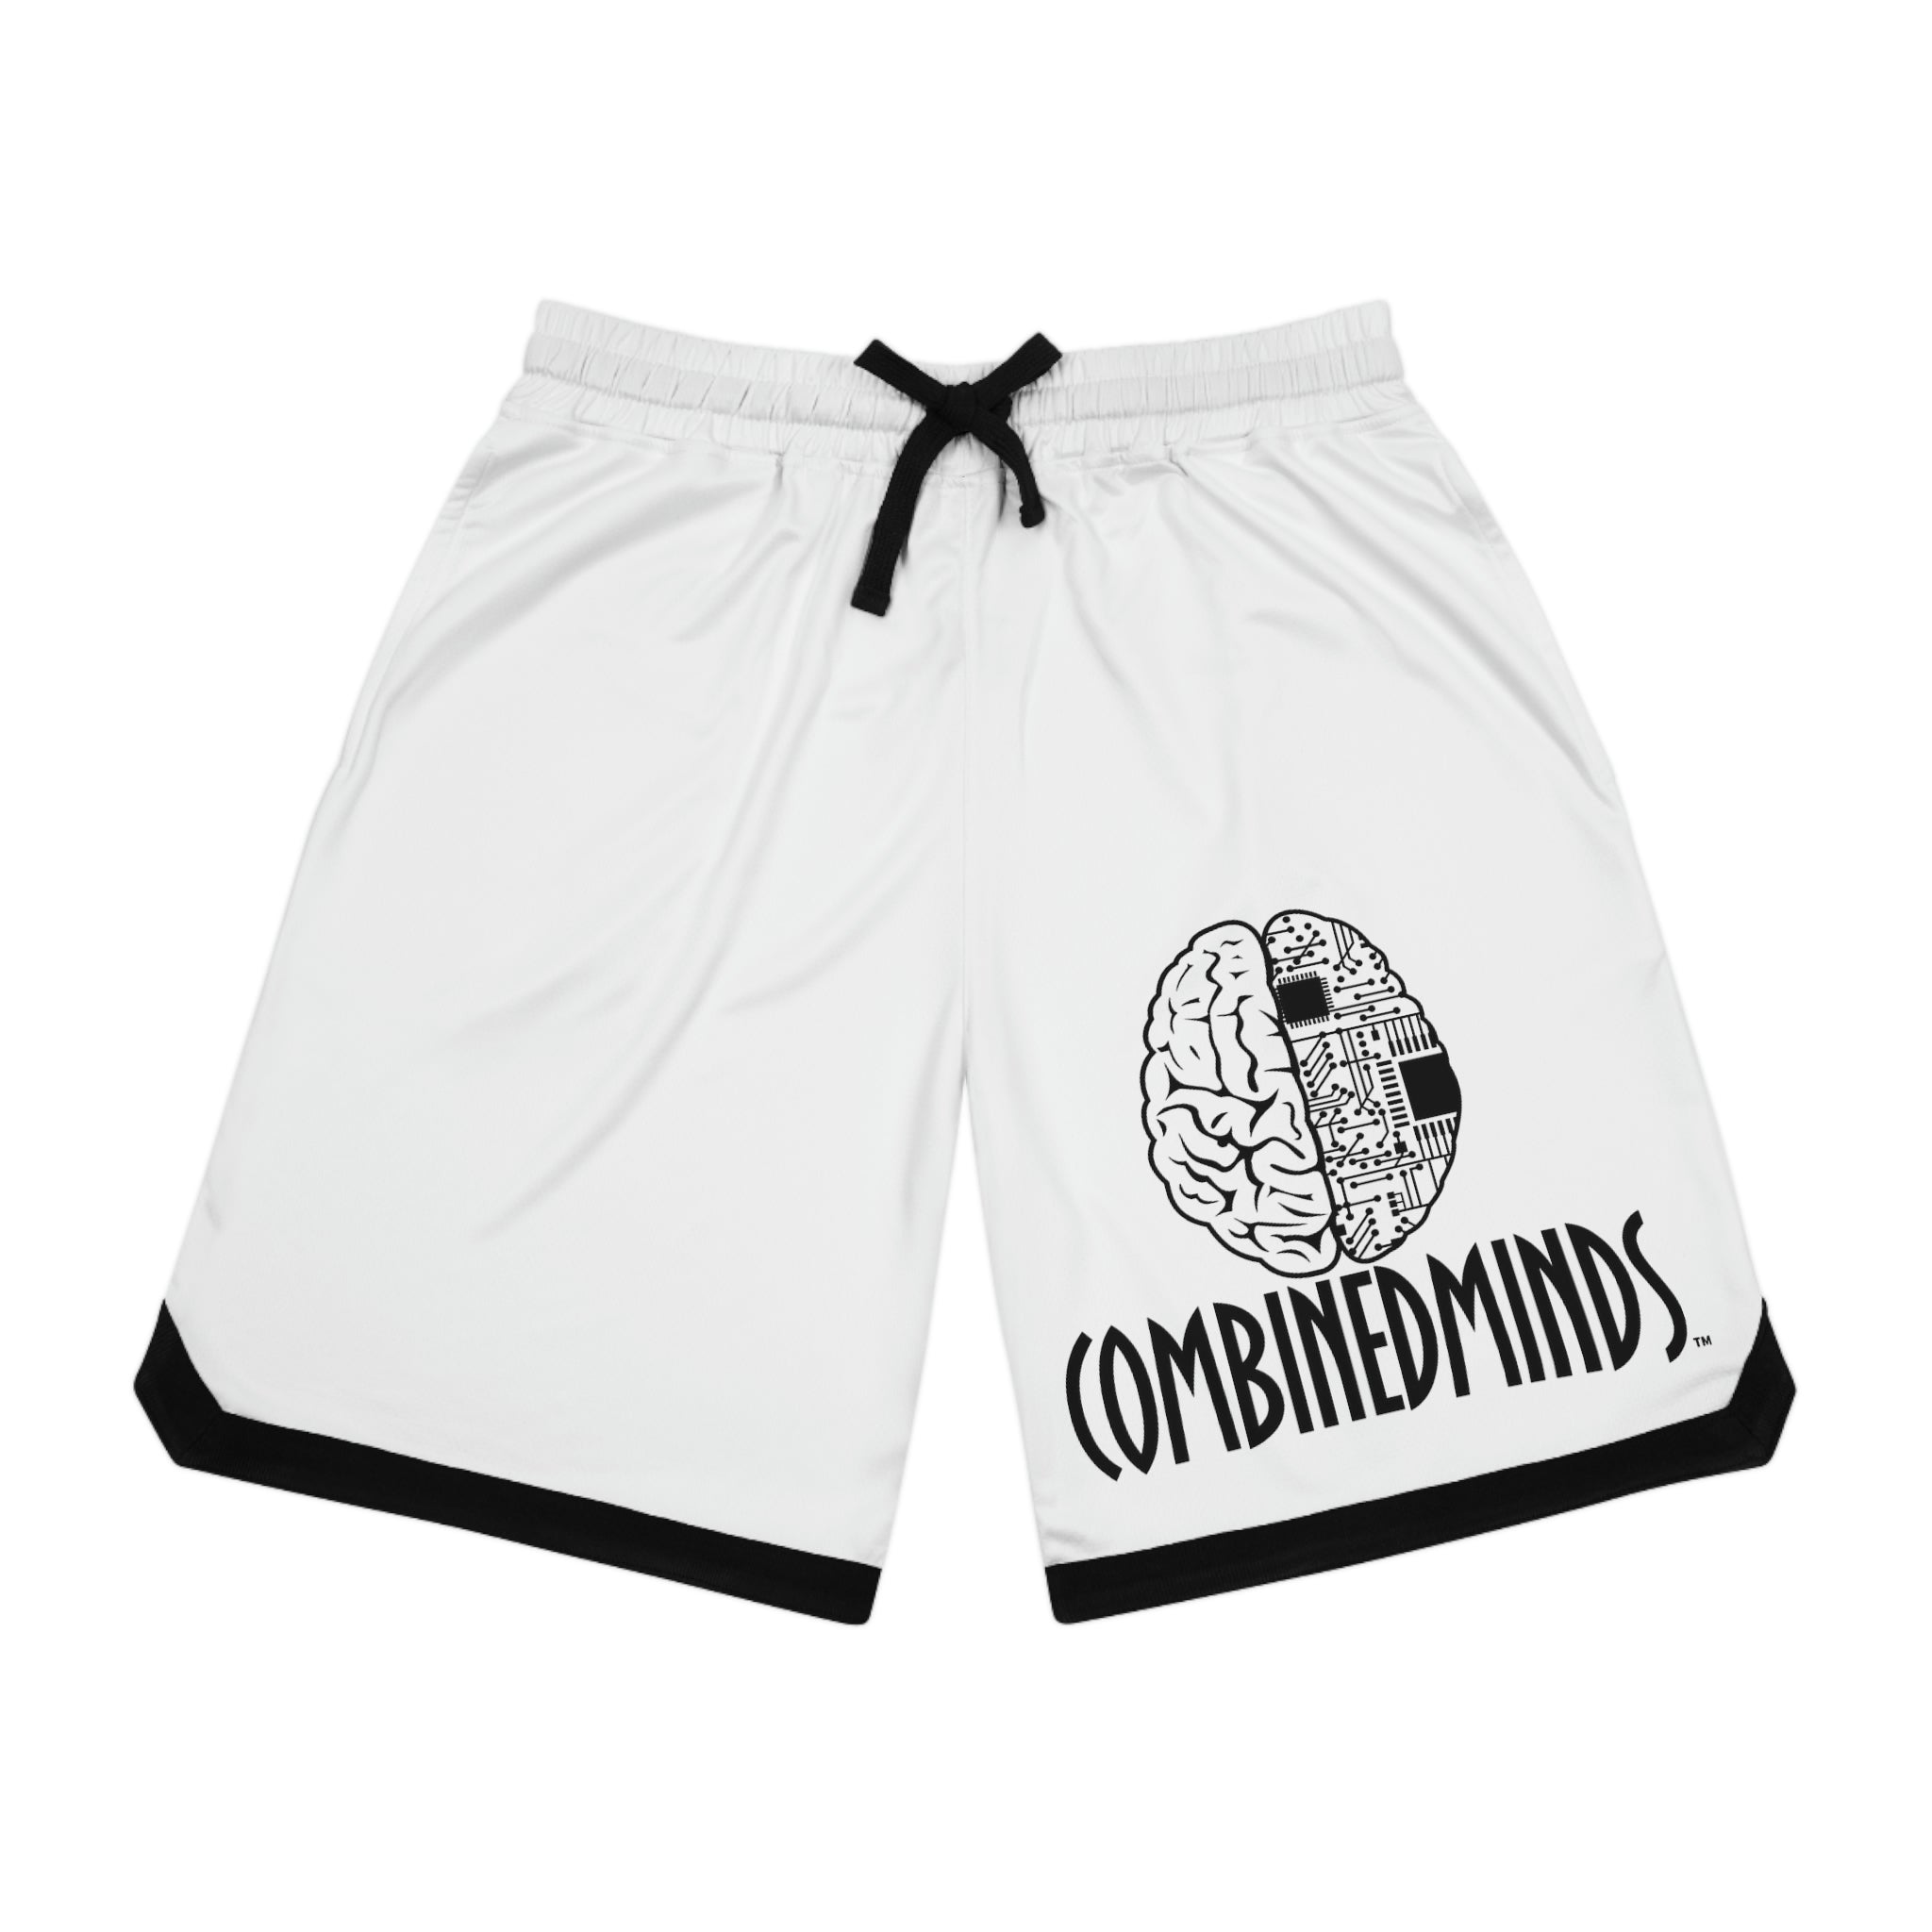 Combinedminds Basketball Shorts Black Logo